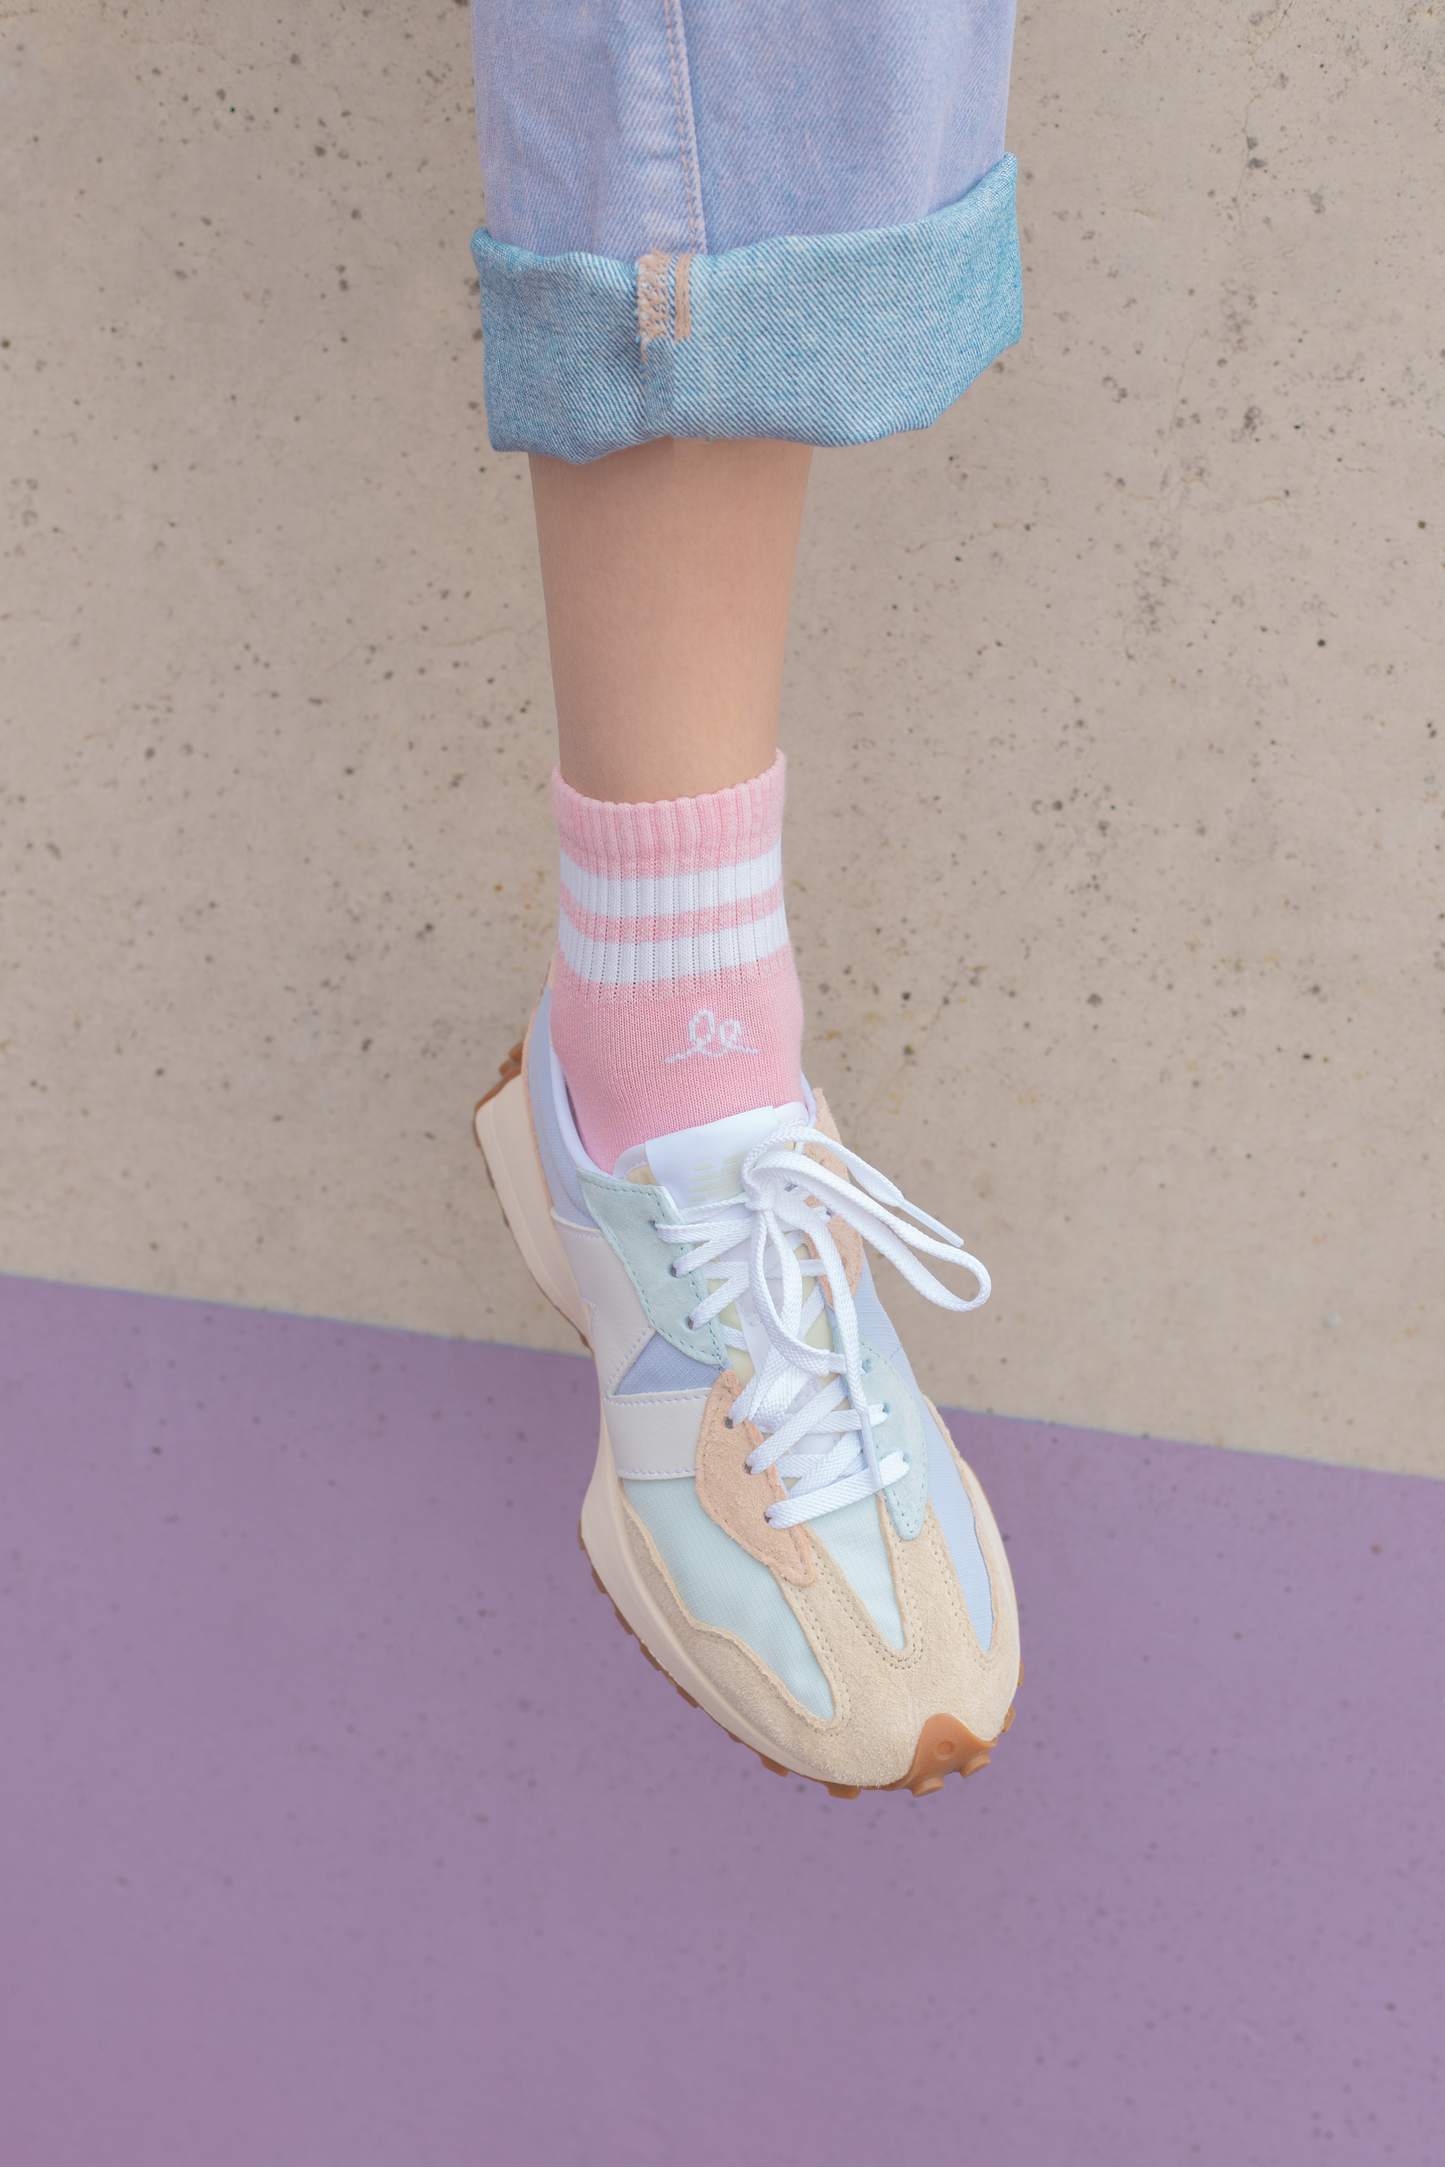 OOLEY Midi Socken (verschiedene Farben)